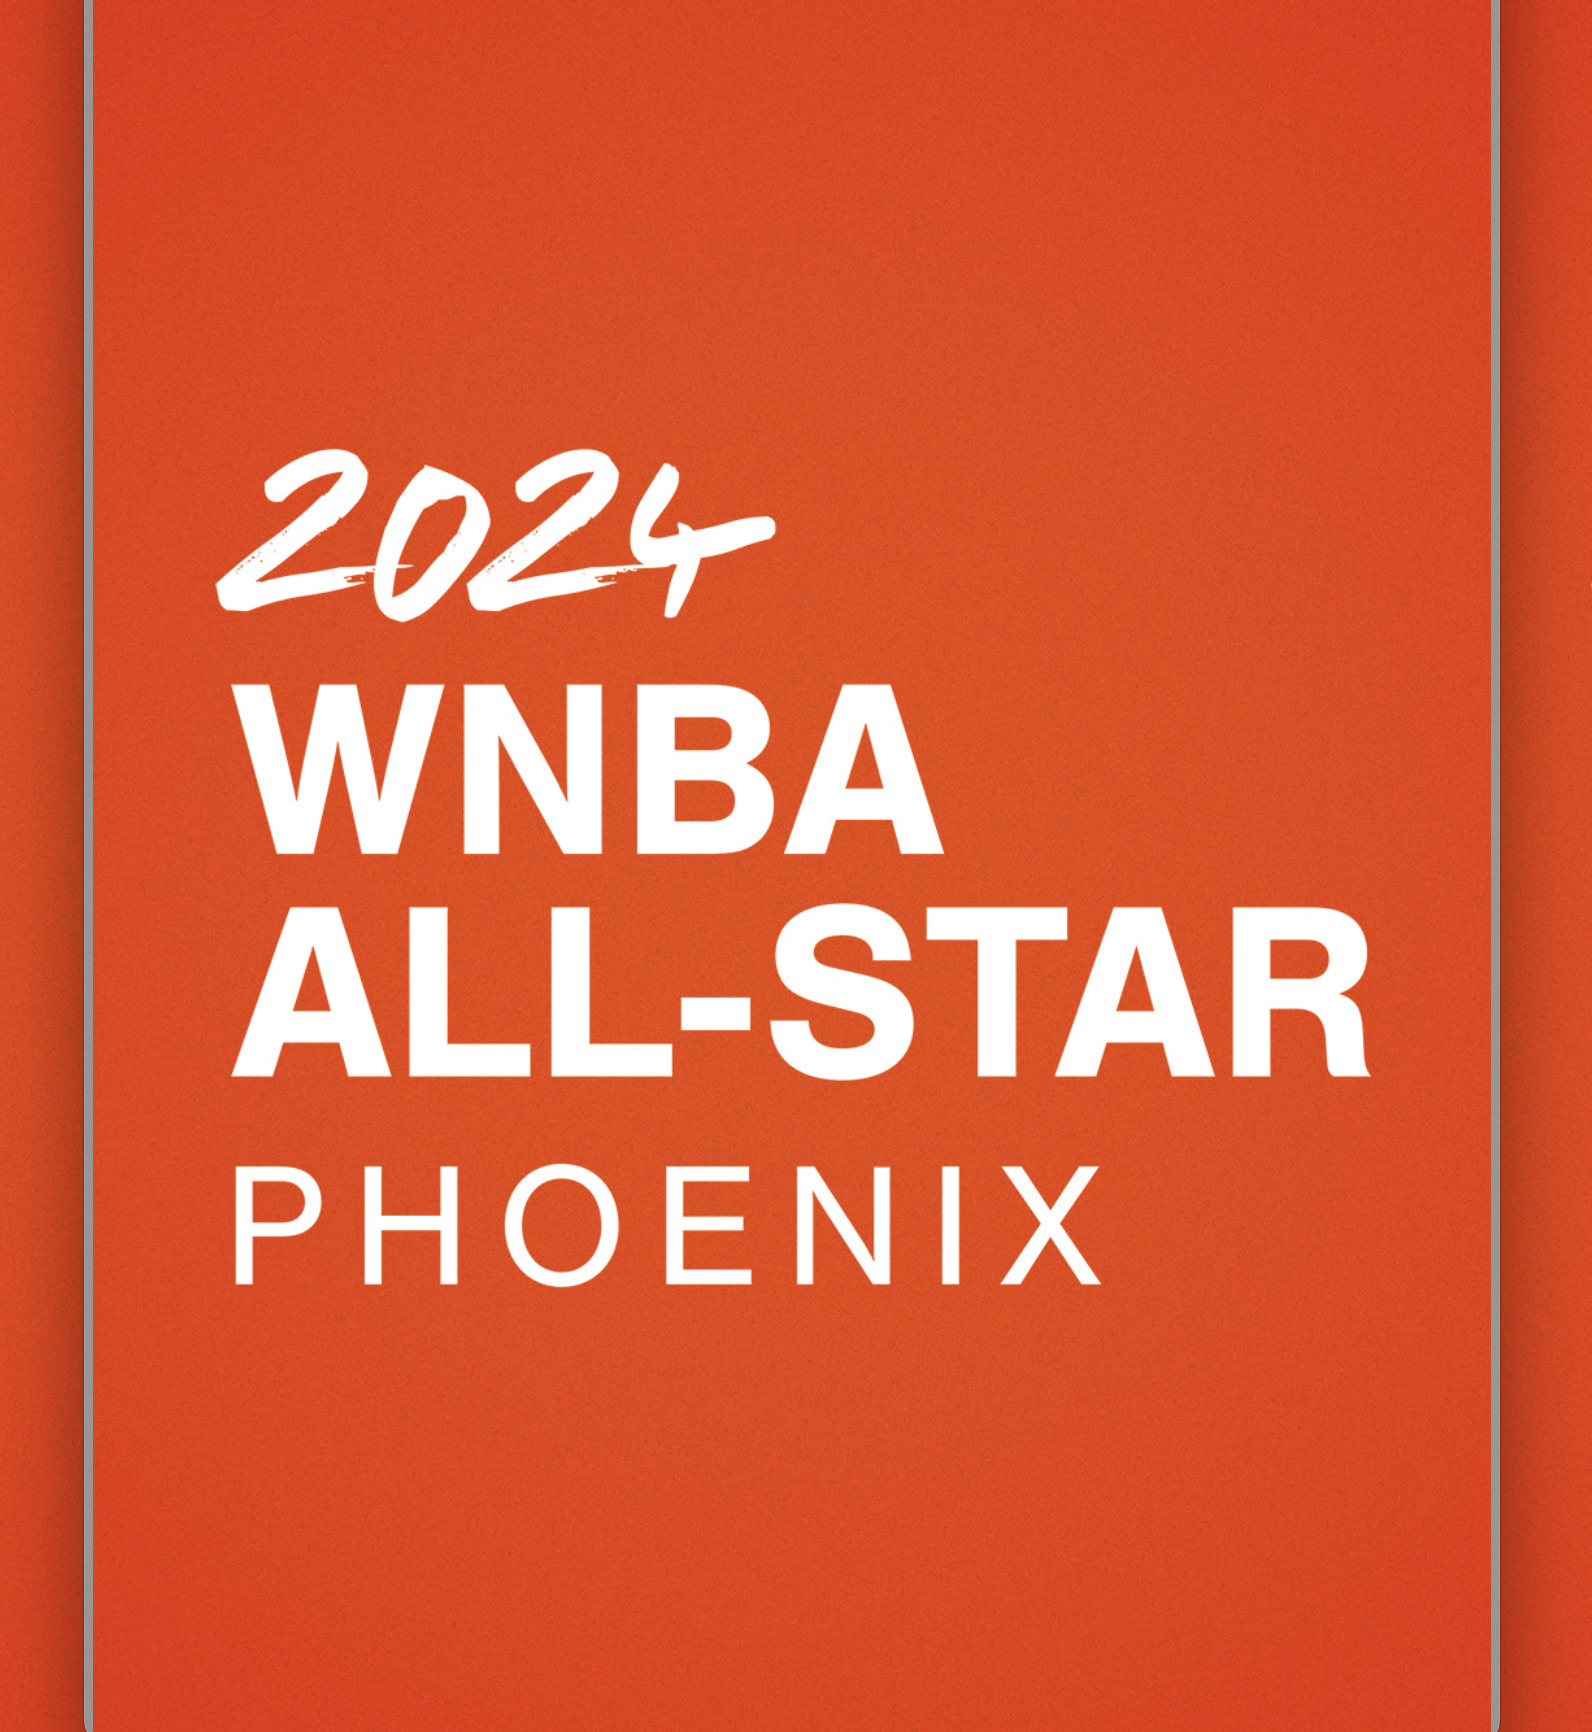 Phoenix to host 2024 WNBA All-Star Weekend